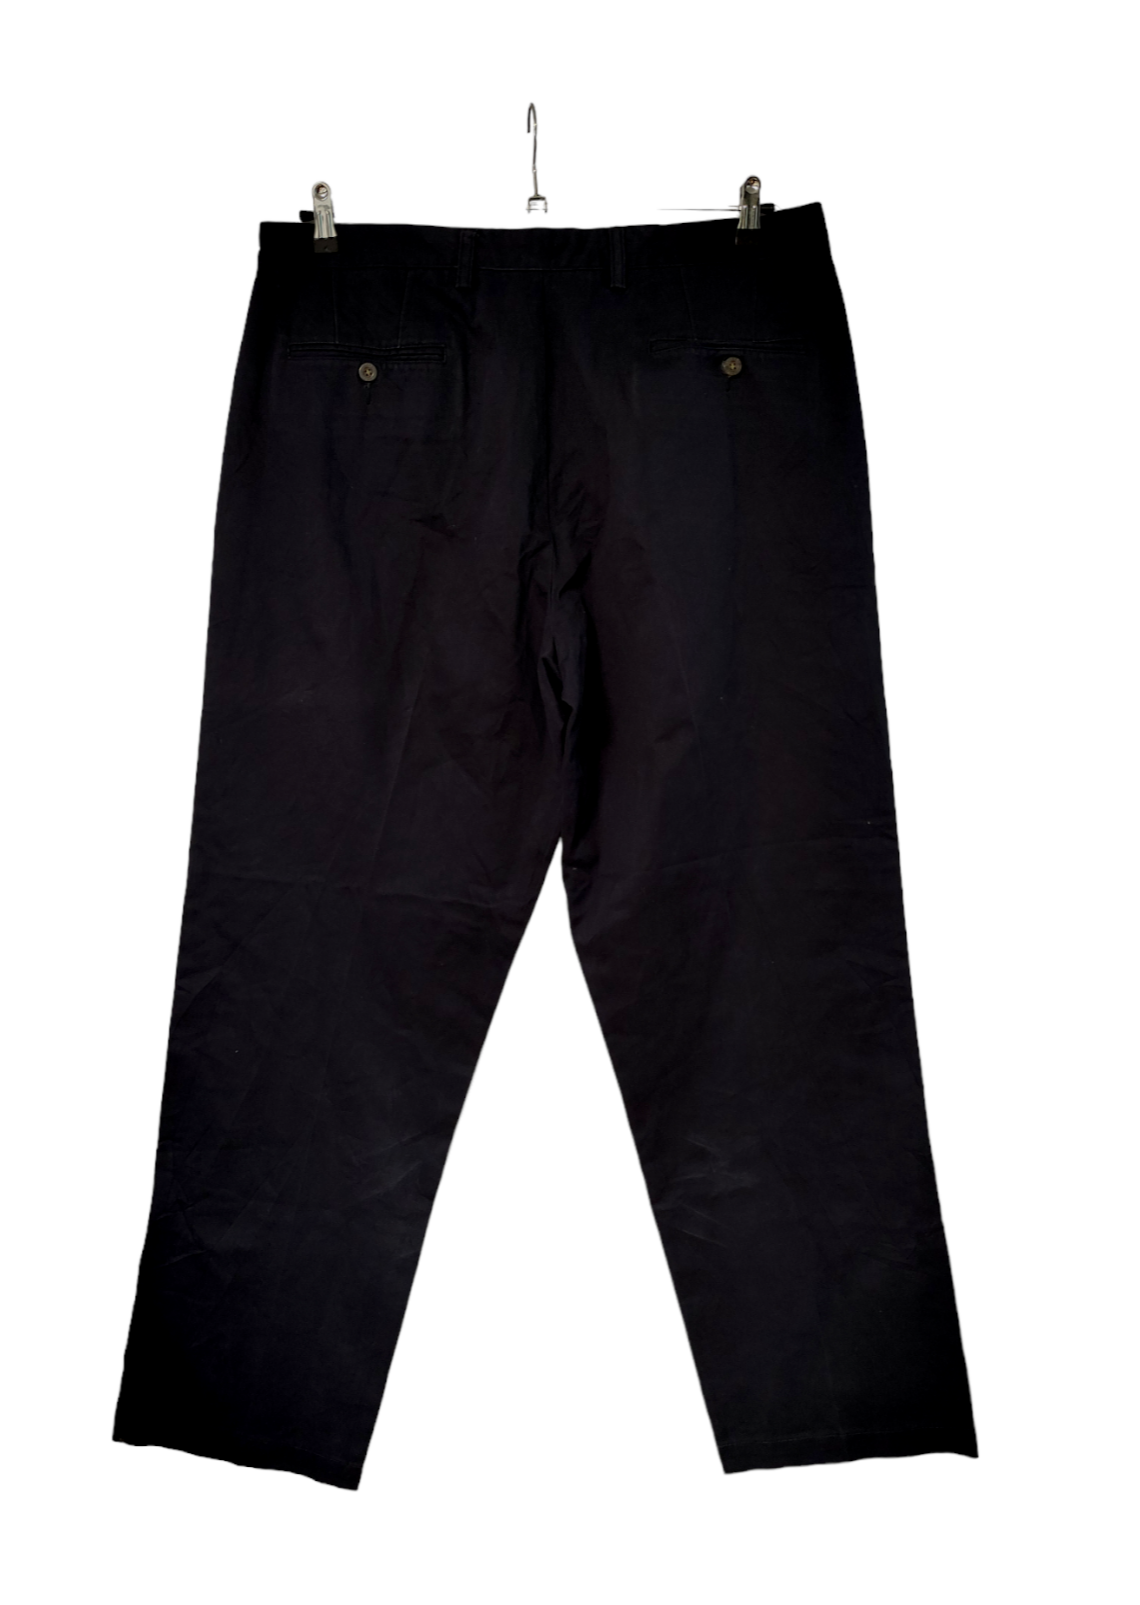 Aνδρικό Παντελόνι DOCKERS σε Σκούρο Μπλε Χρώμα (No 38 - 2XL)